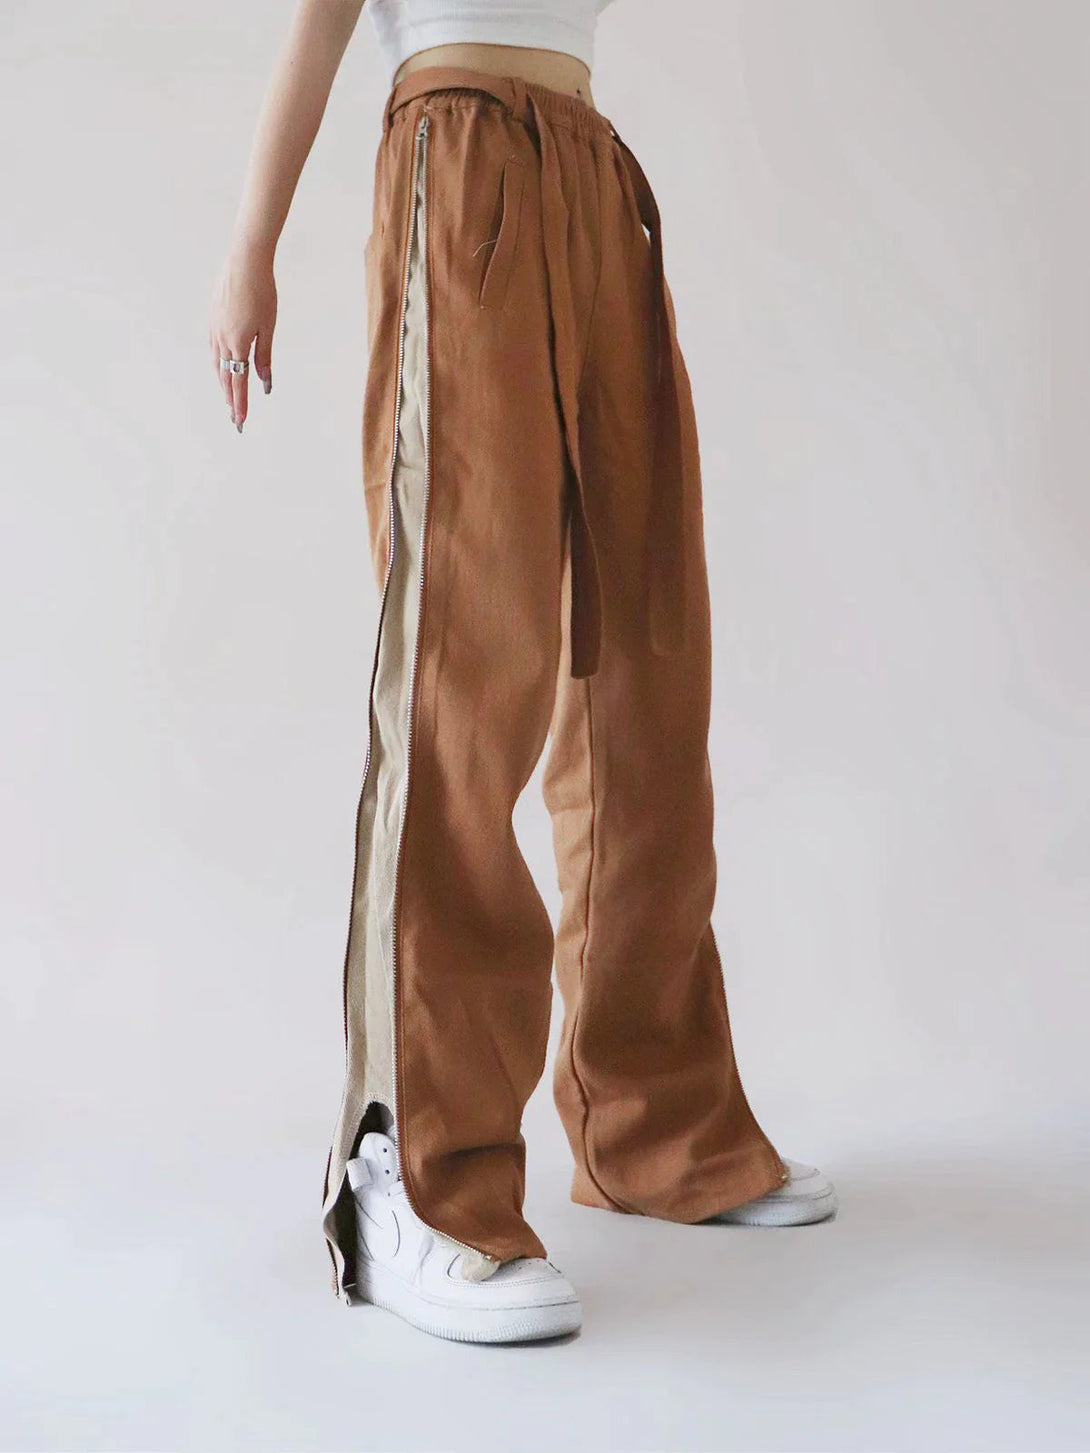 Majesda® - Colorblock Side Slits Pants outfit ideas streetwear fashion